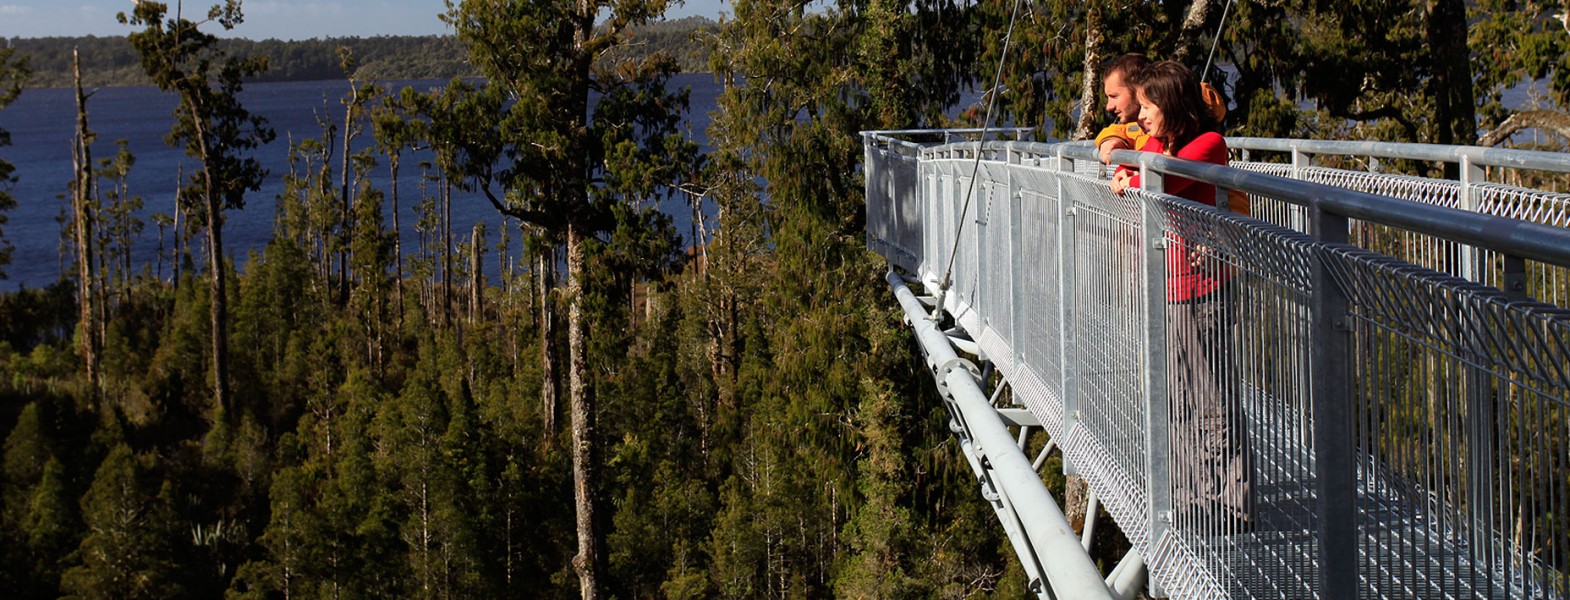 New Zealand’s first treetop walk to inject $3 million into the Hokitika regional economy each year